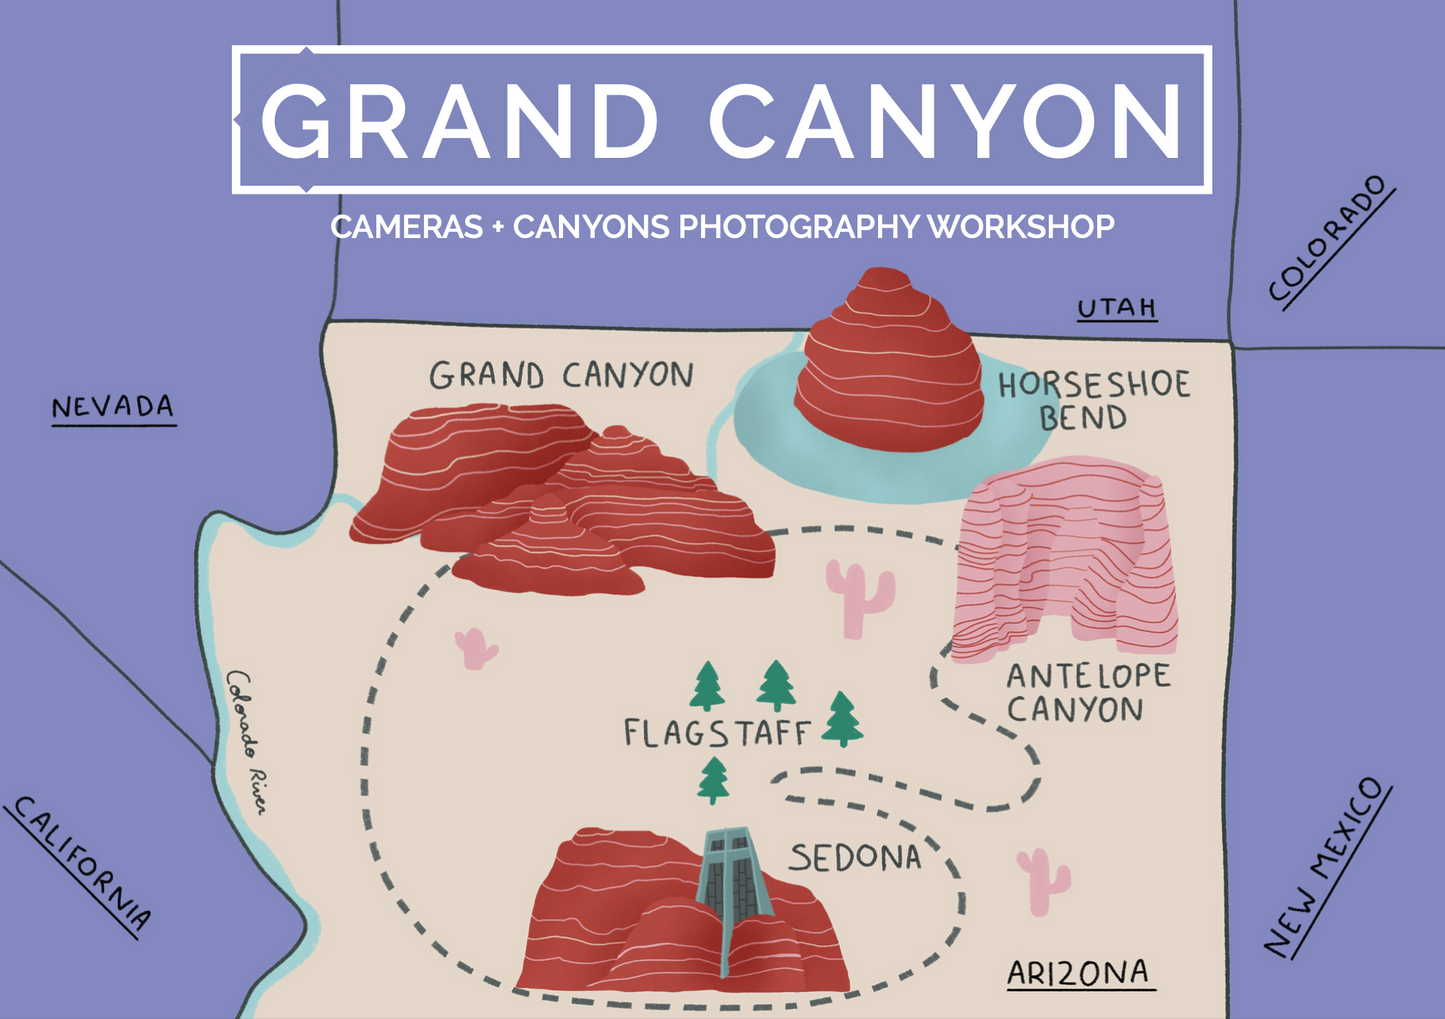 Grand Canyon Photography Tour